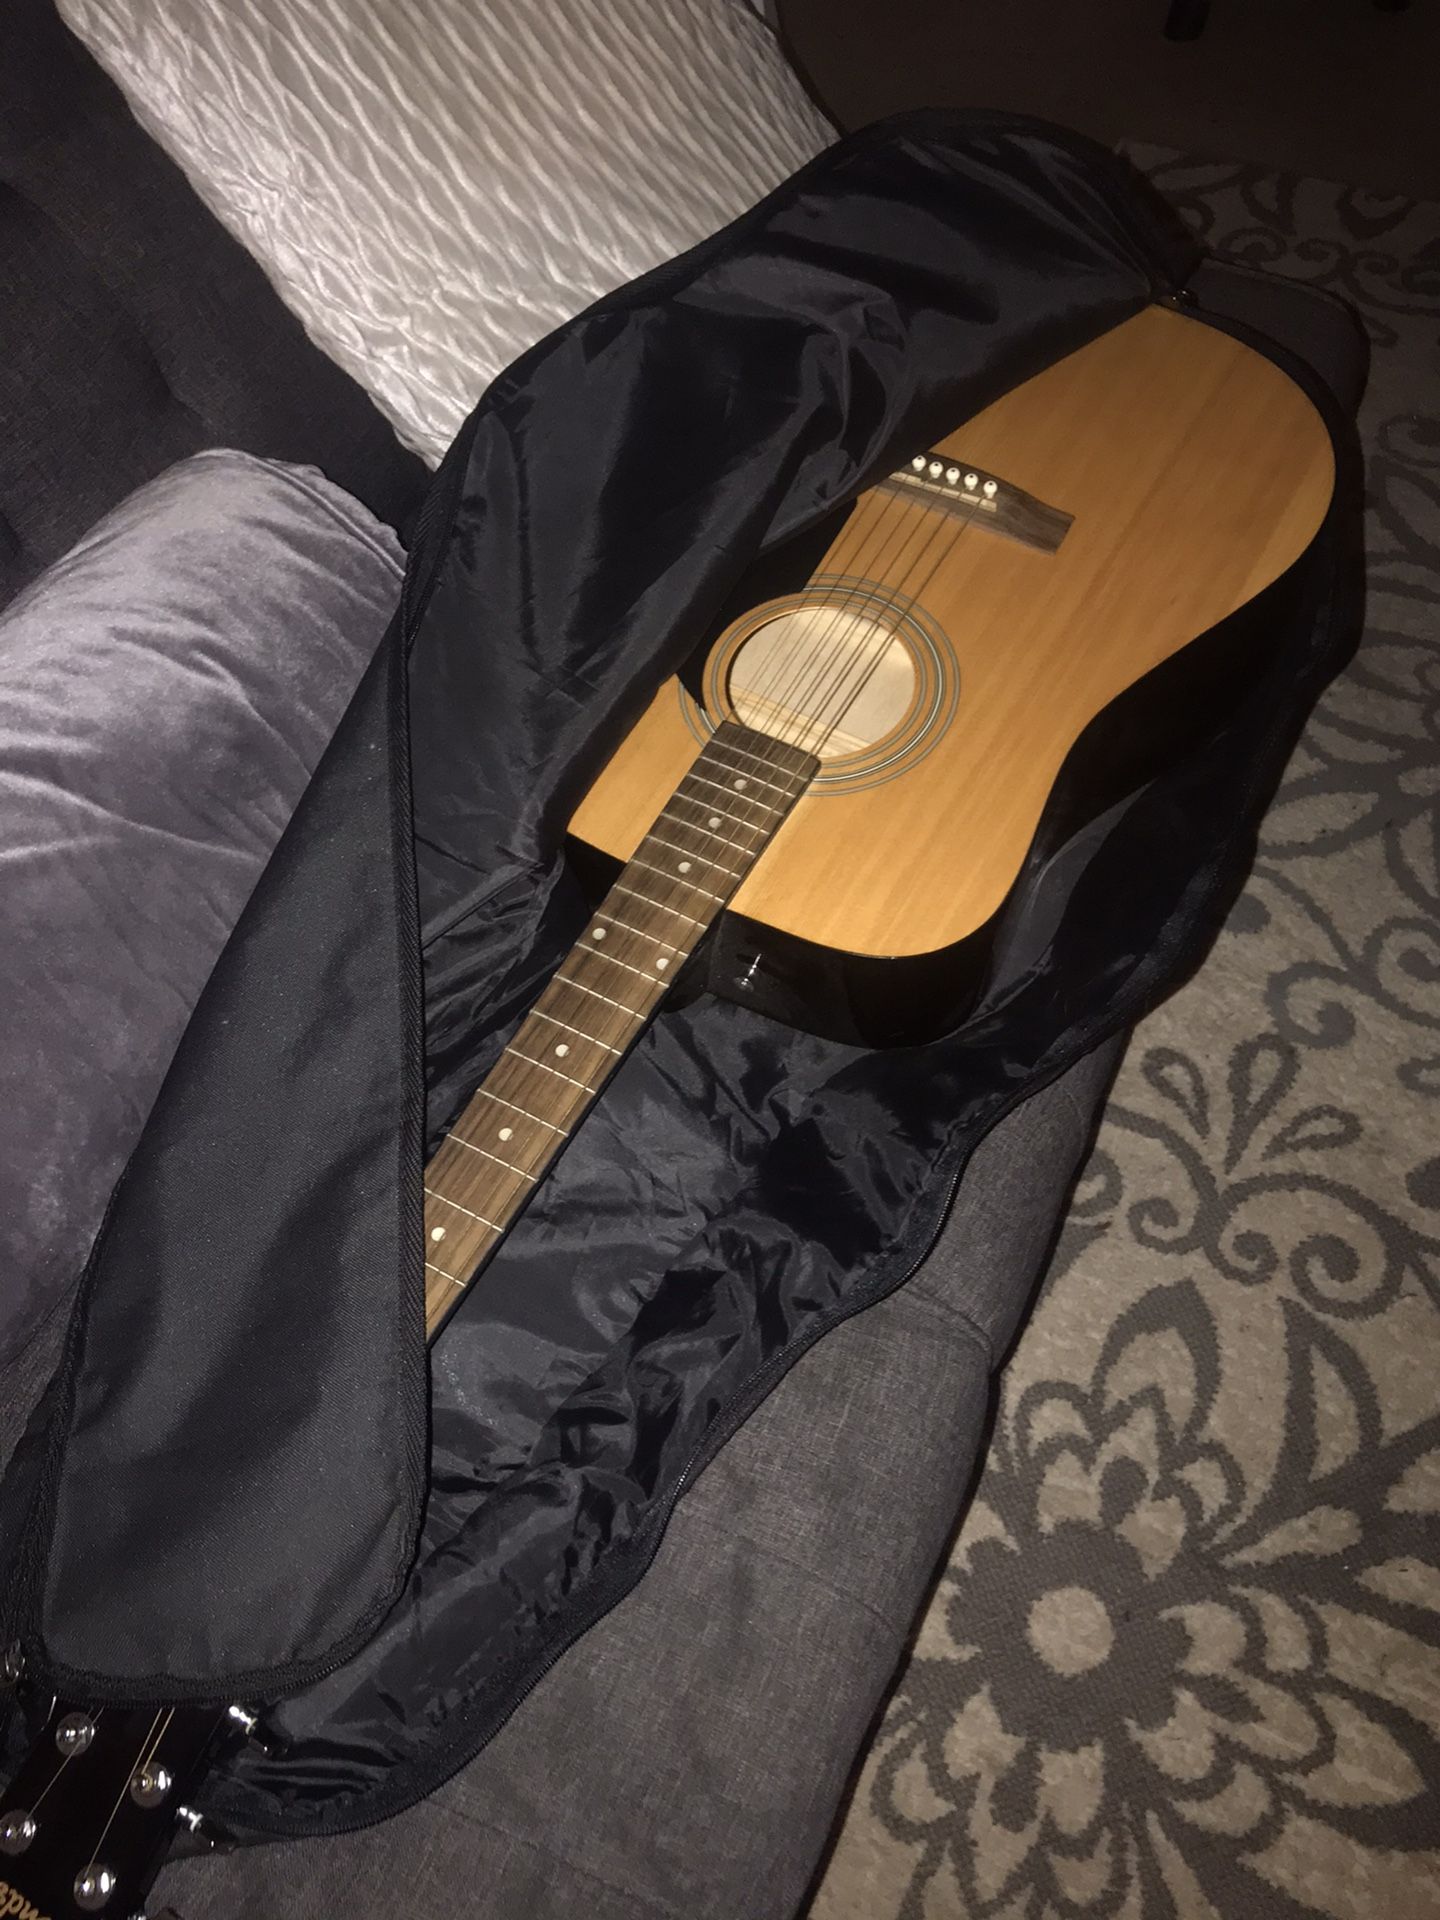 Fender guitar with backpack case